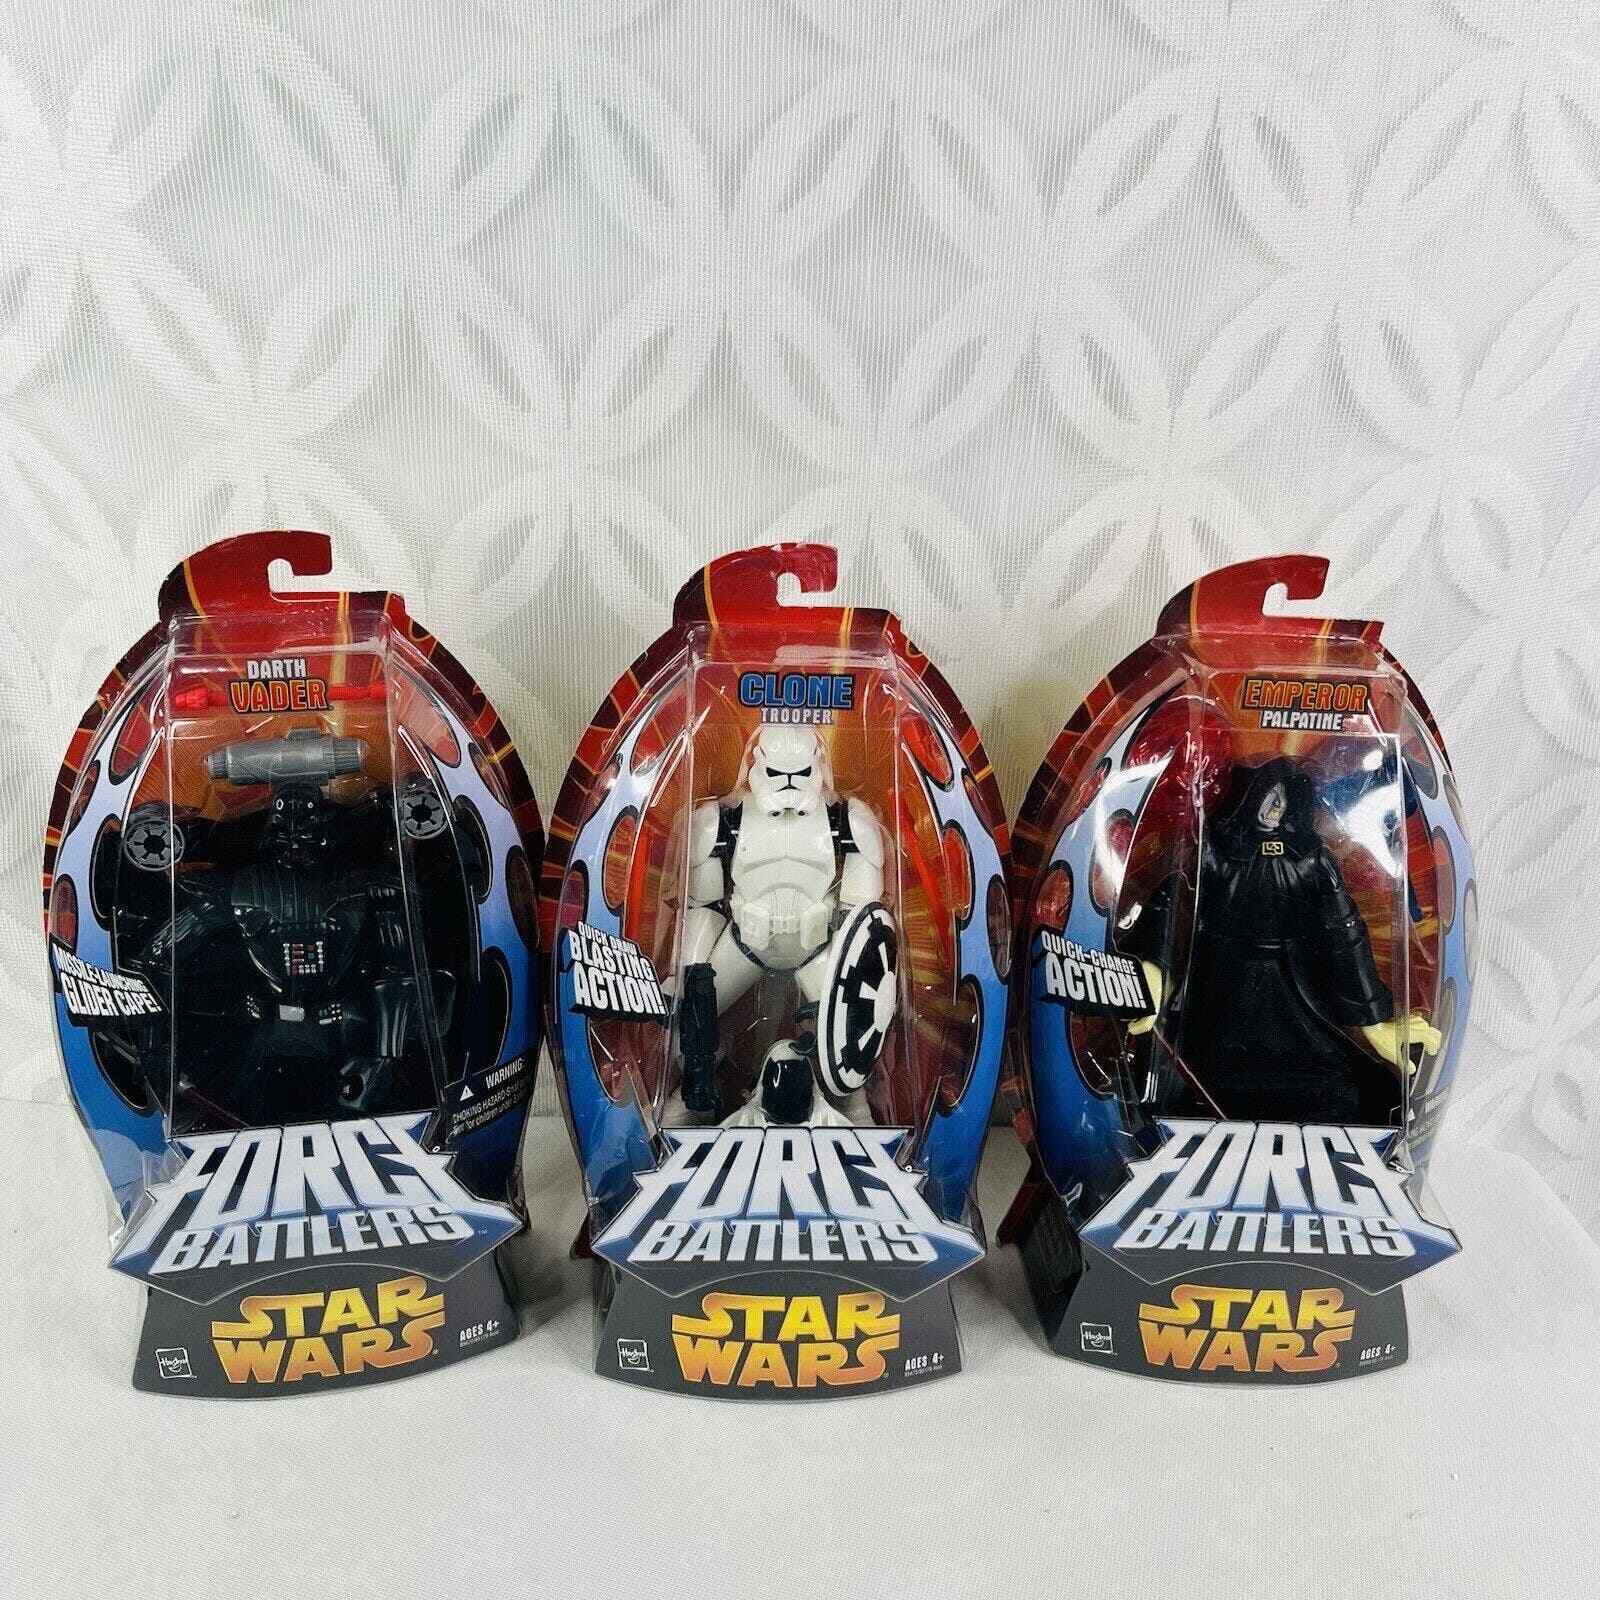 Hasbro Star Wars Force Battlers Clone Trooper Darth Vader Palpatine 2005